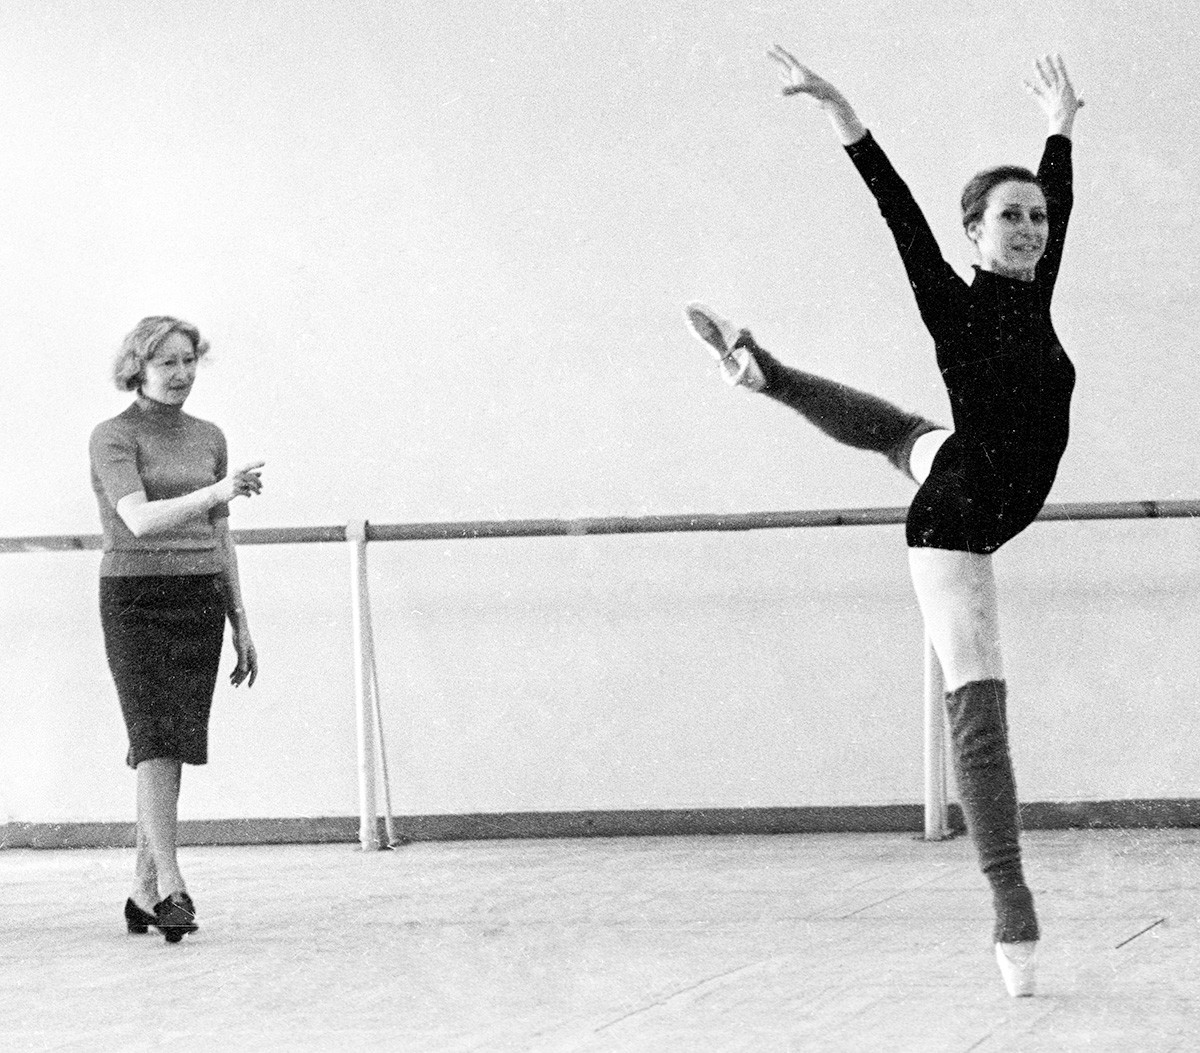 Choreography teacher Galina Ulanova (left) and dancer Maya Plisetskaya (right) rehearsing, 1969.